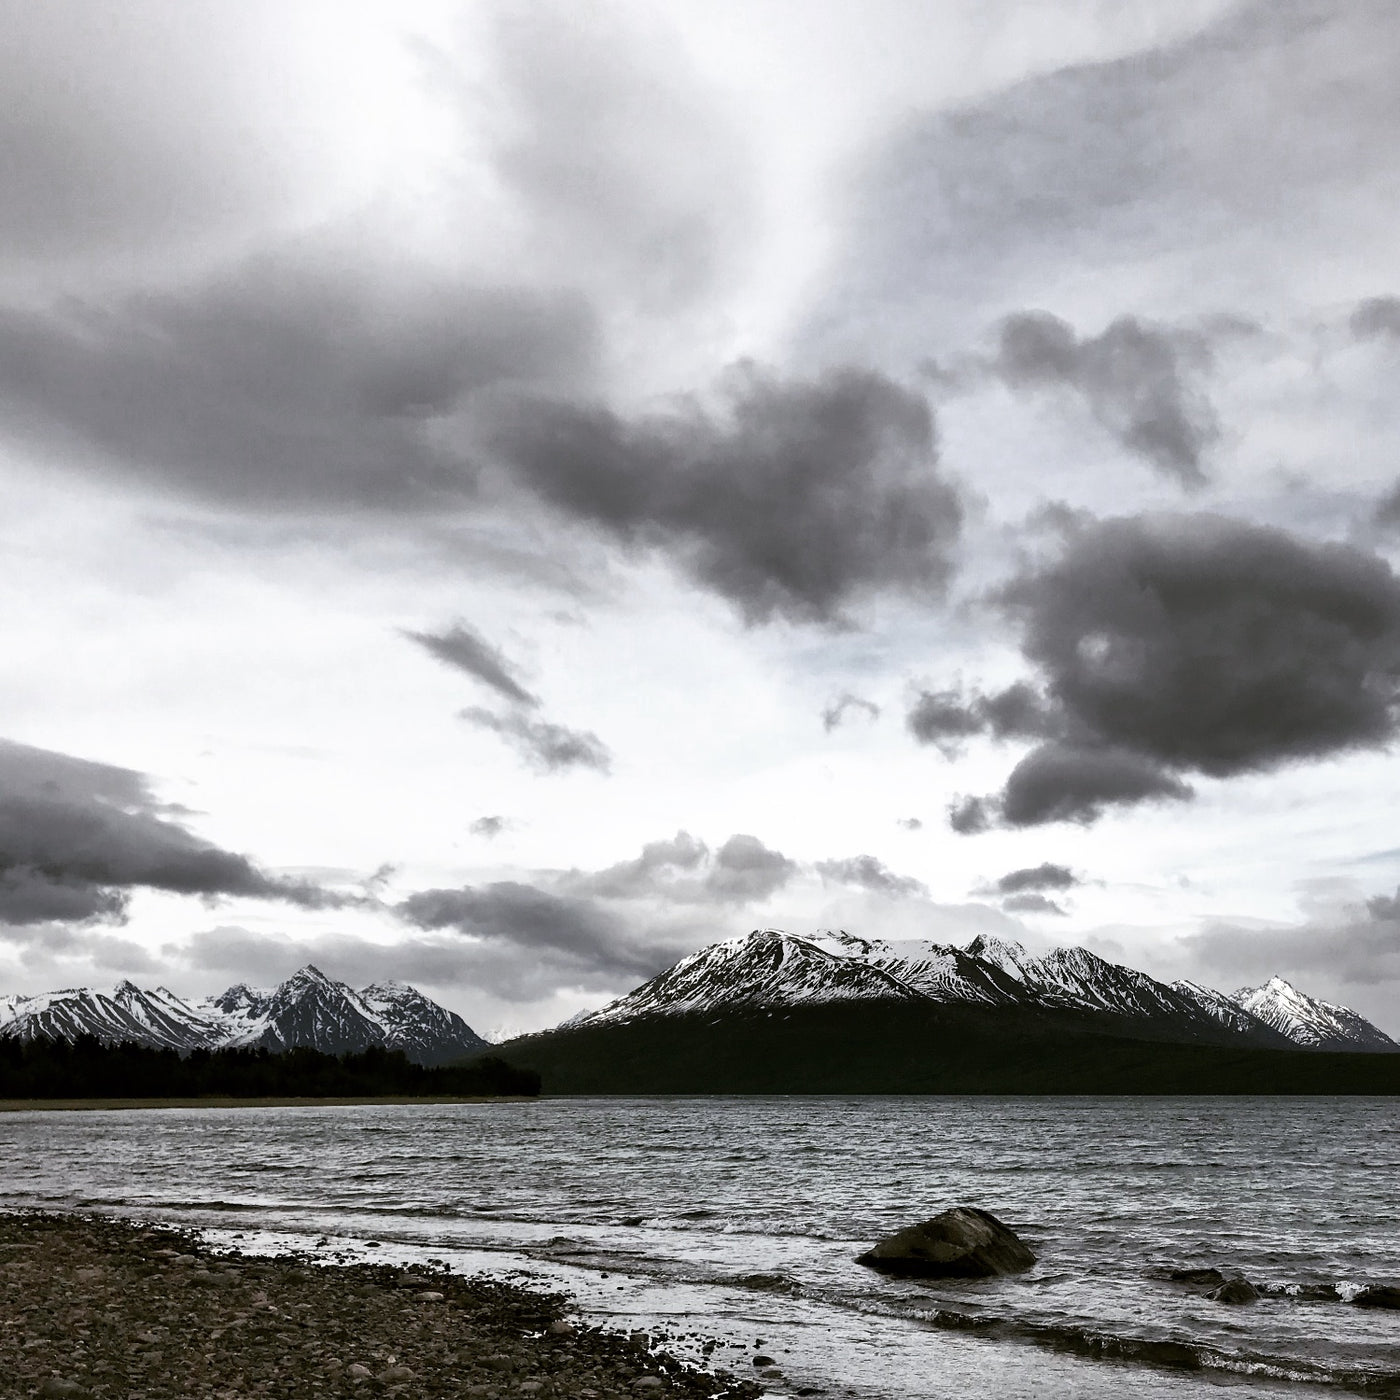 AMB28 Alaska: Lake Waves